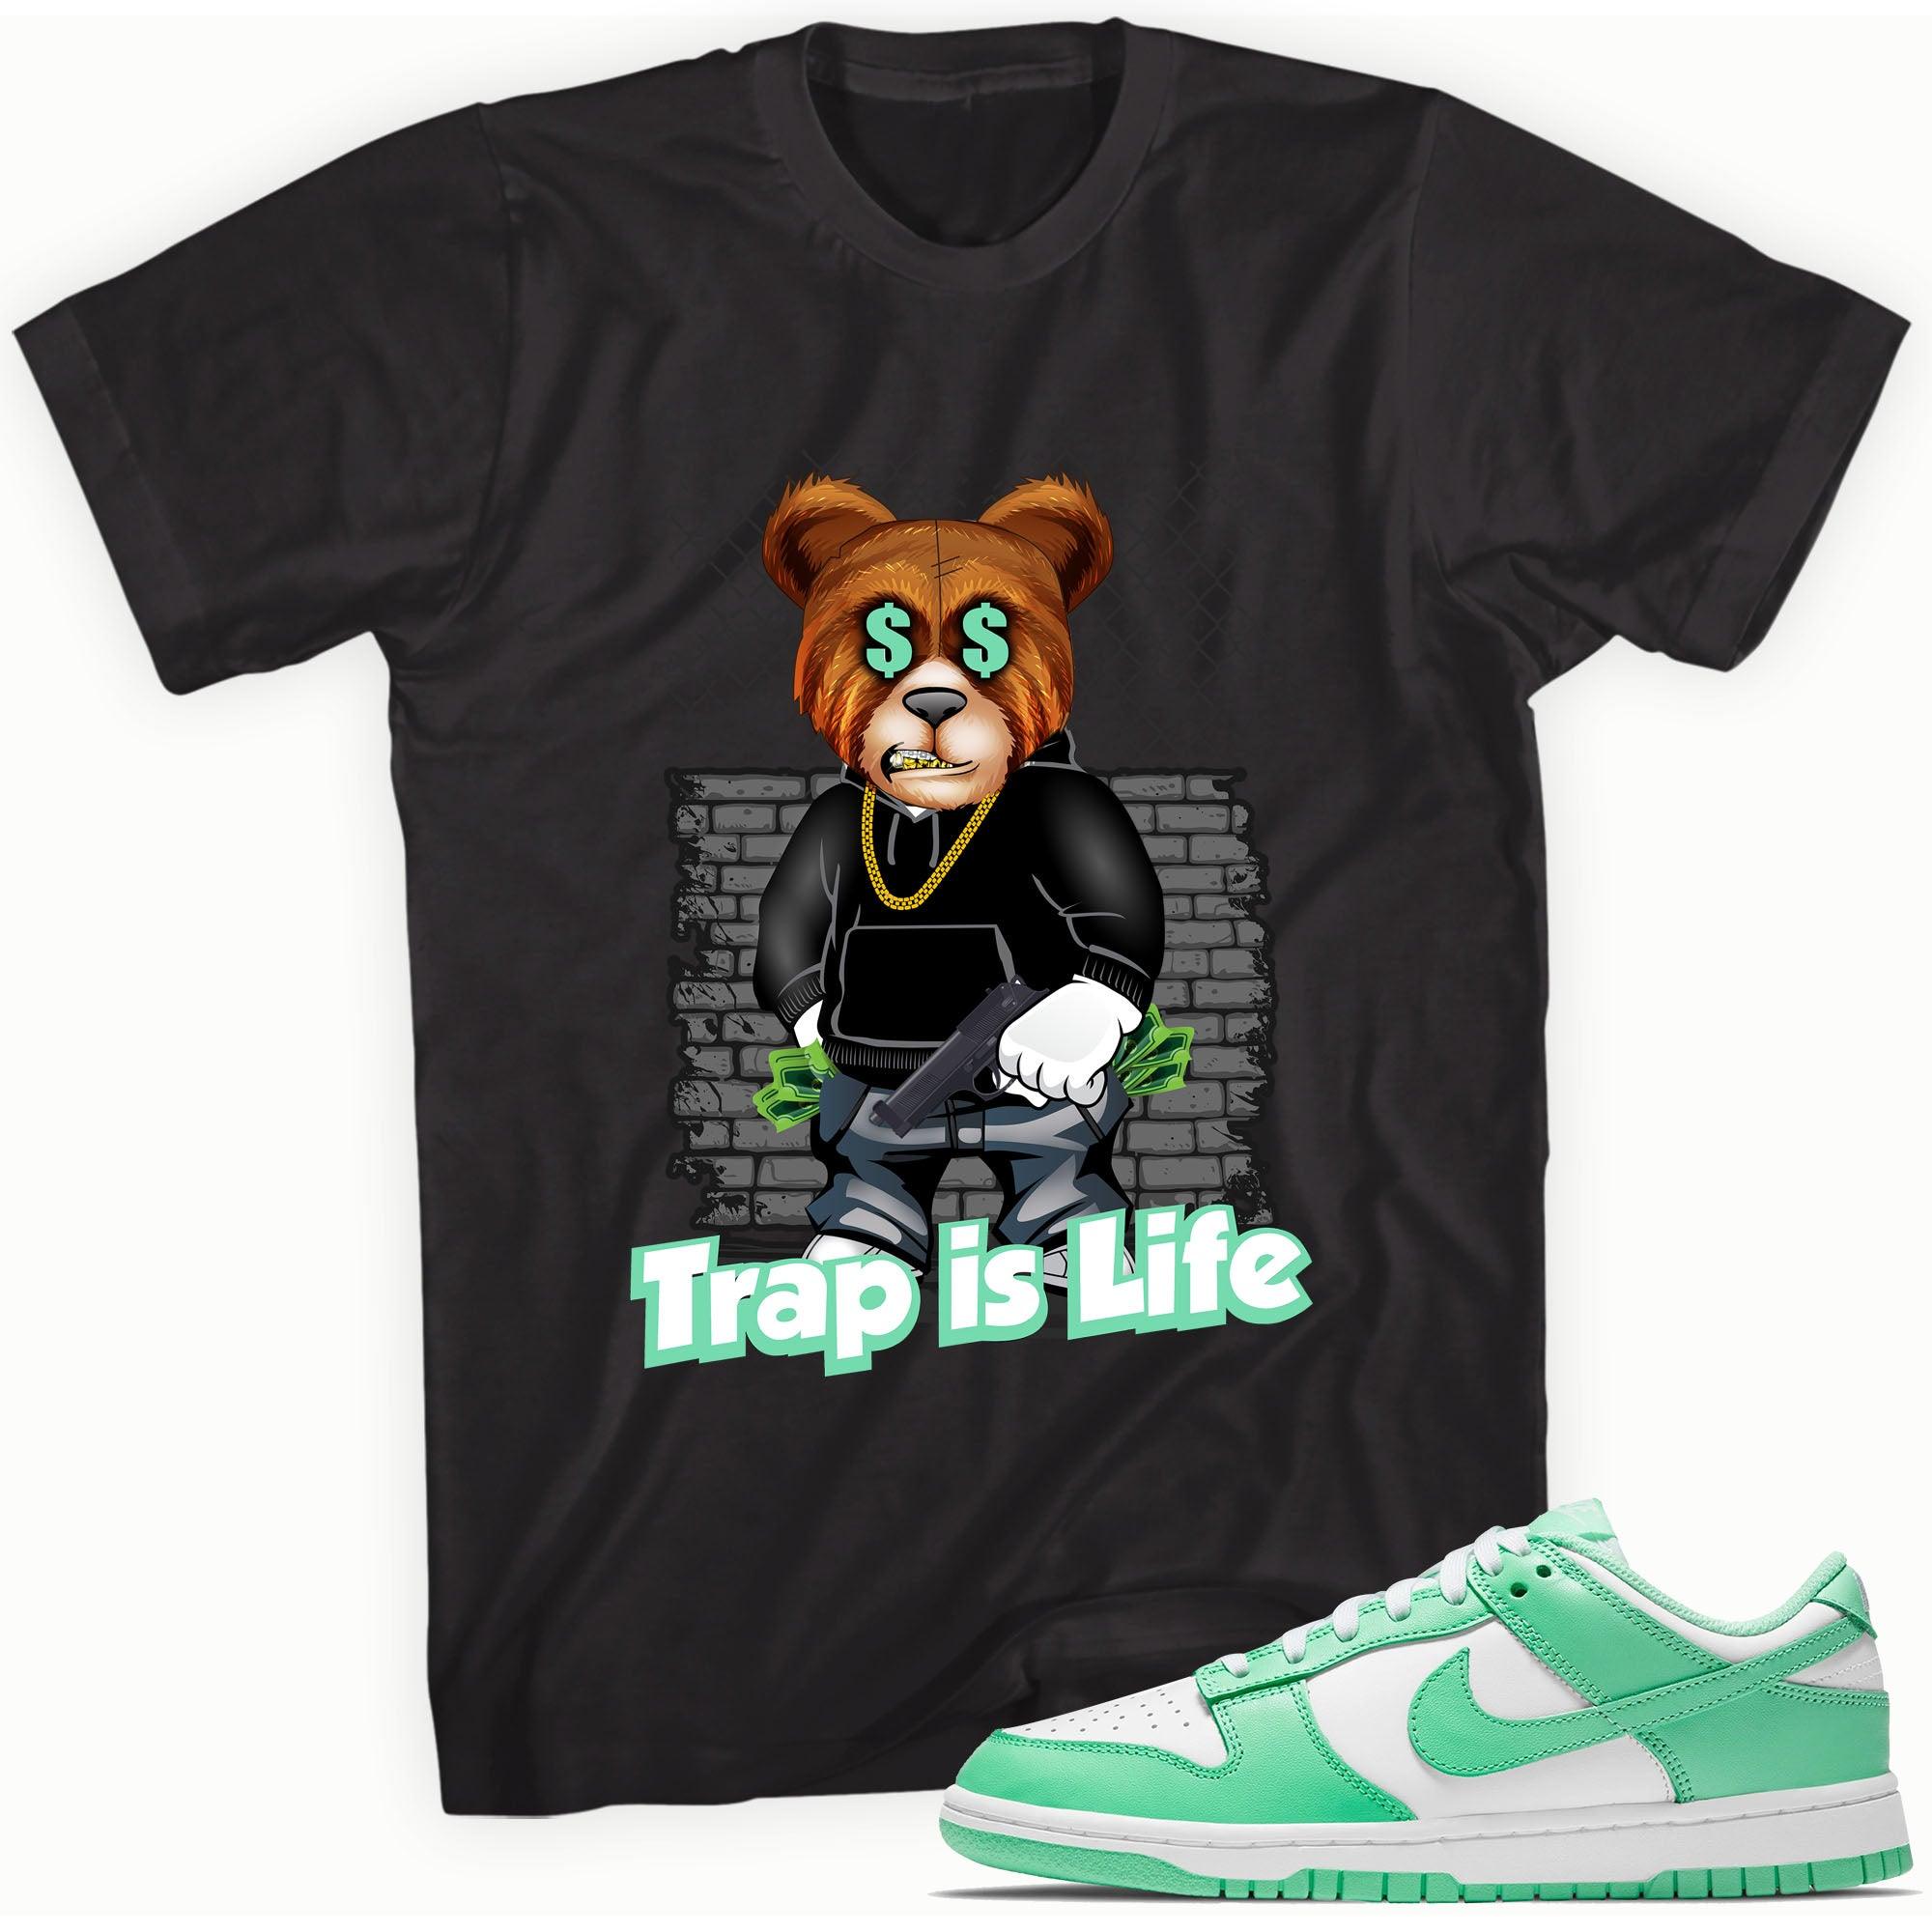 Black Trap is Life Shirt Nike Dunks Low Green Glow photo